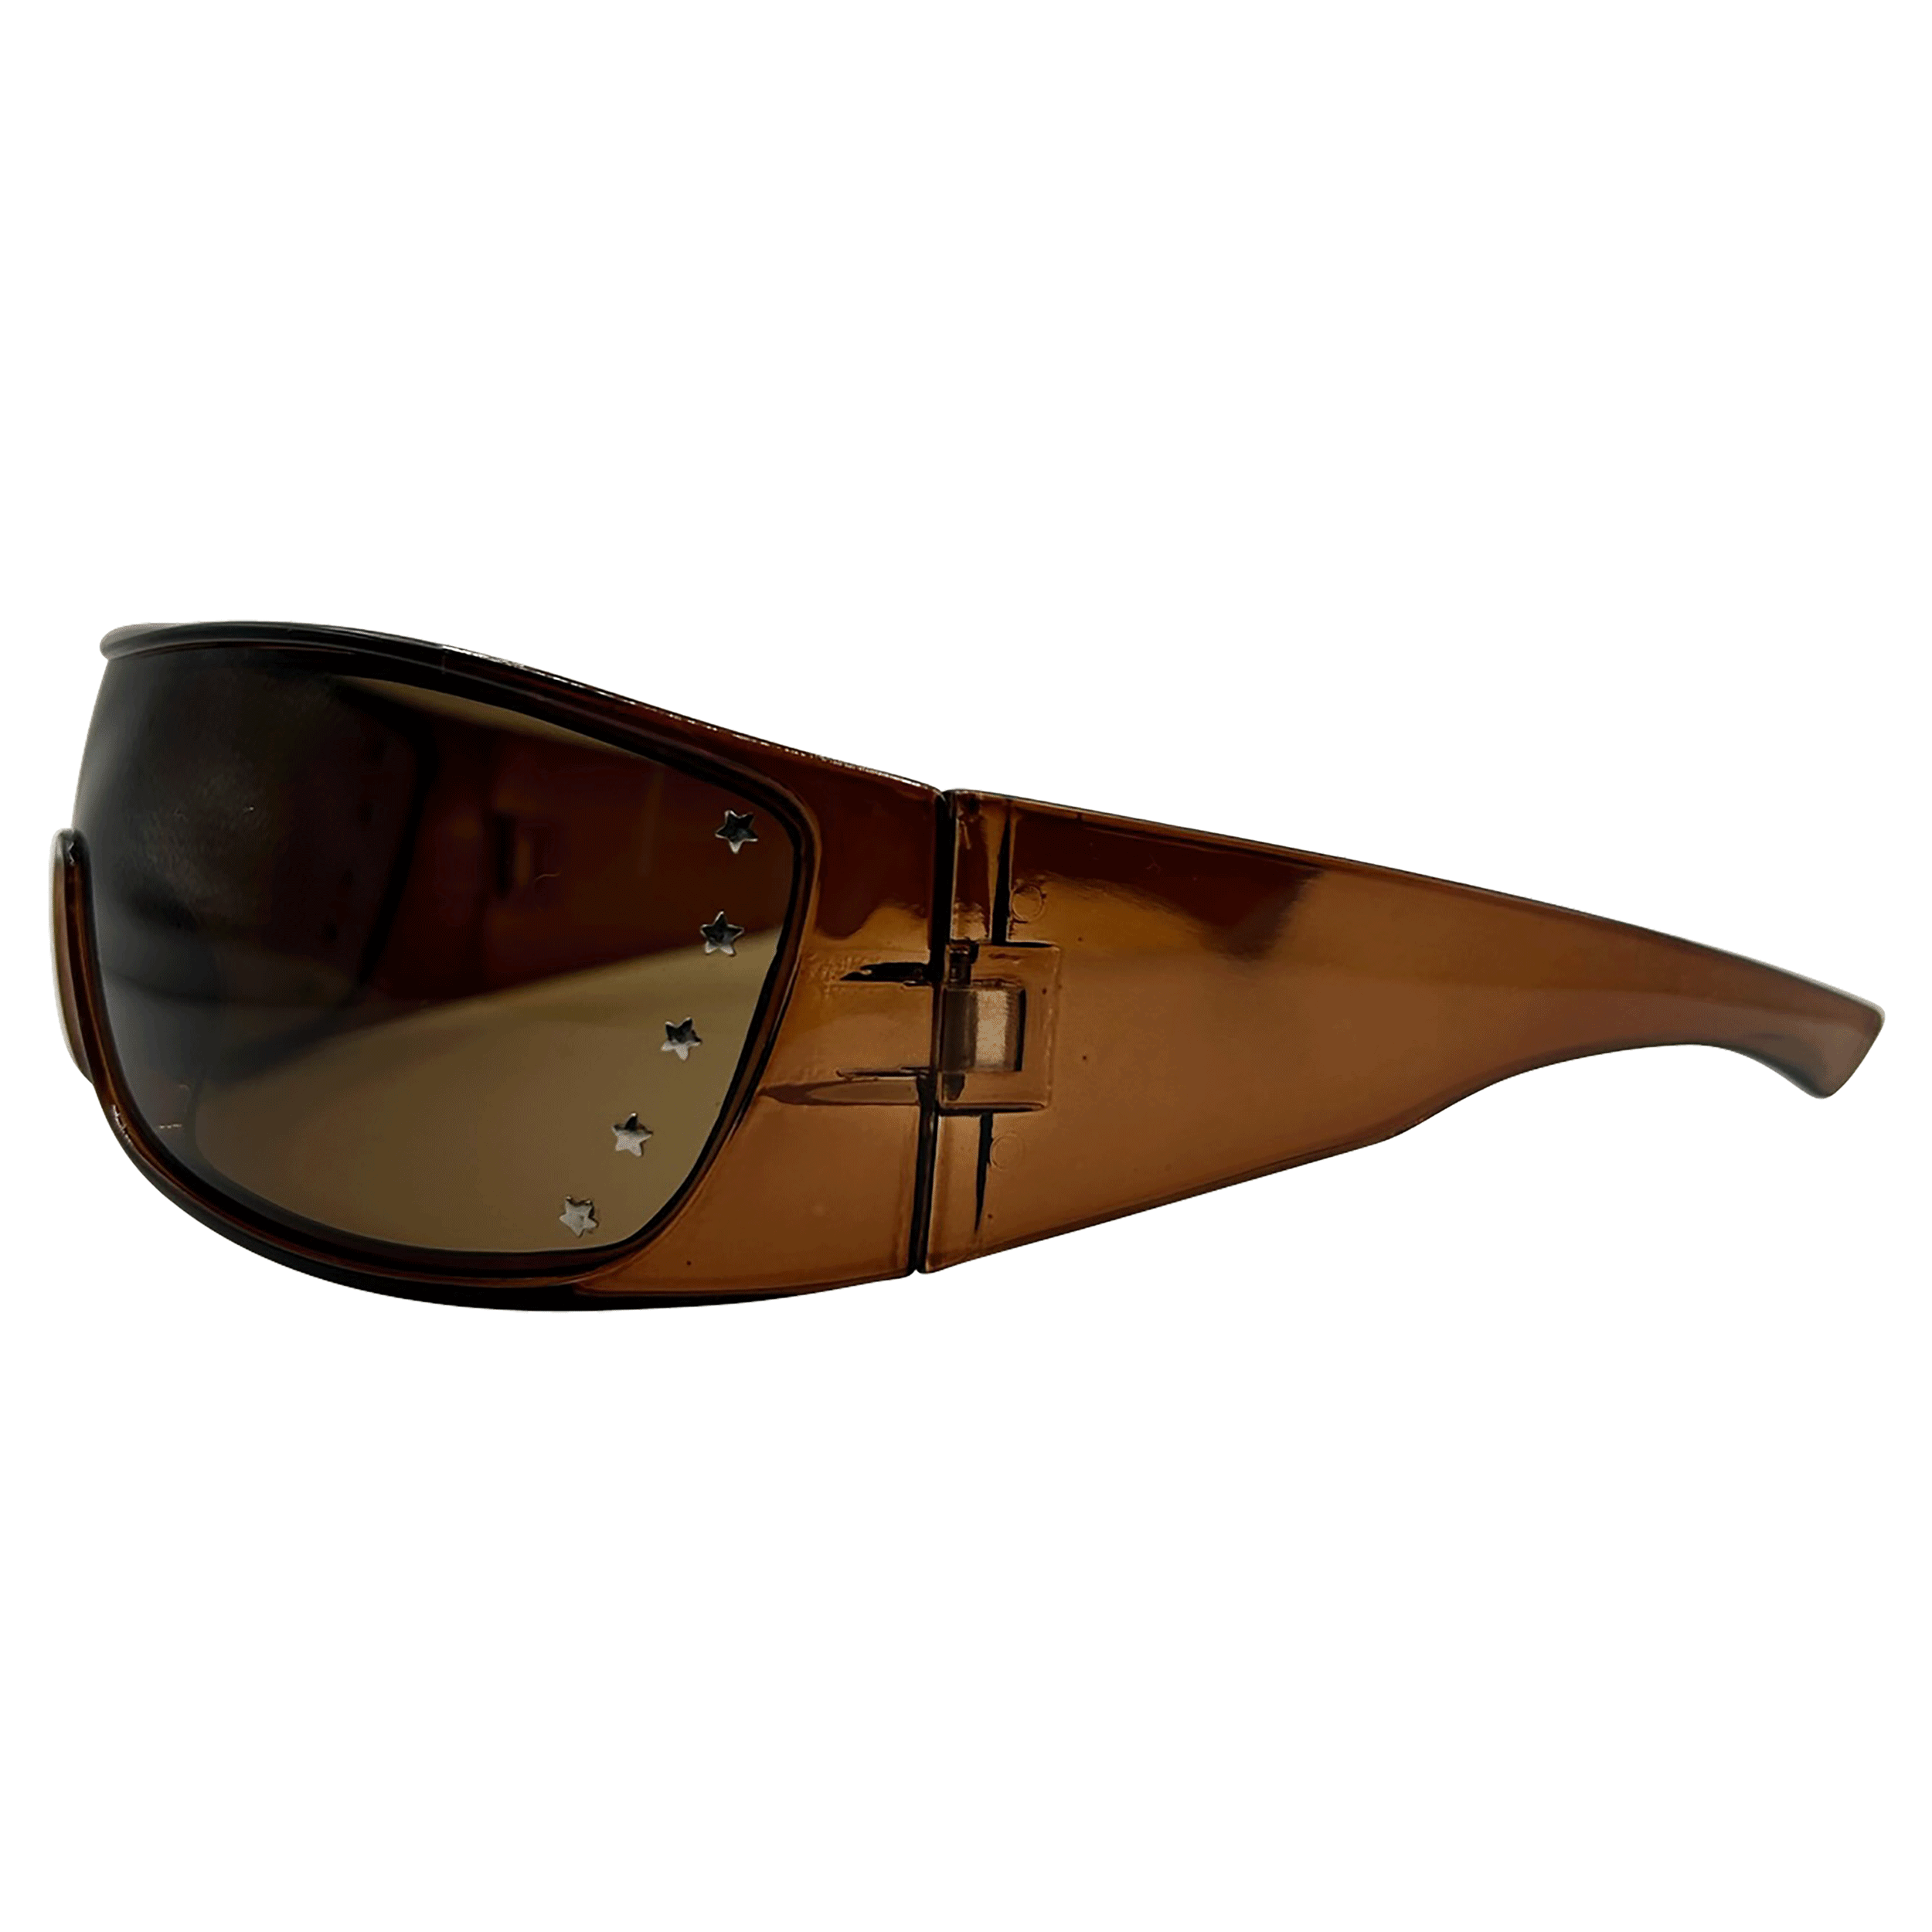 SUPERSTAR Shield Sunglasses